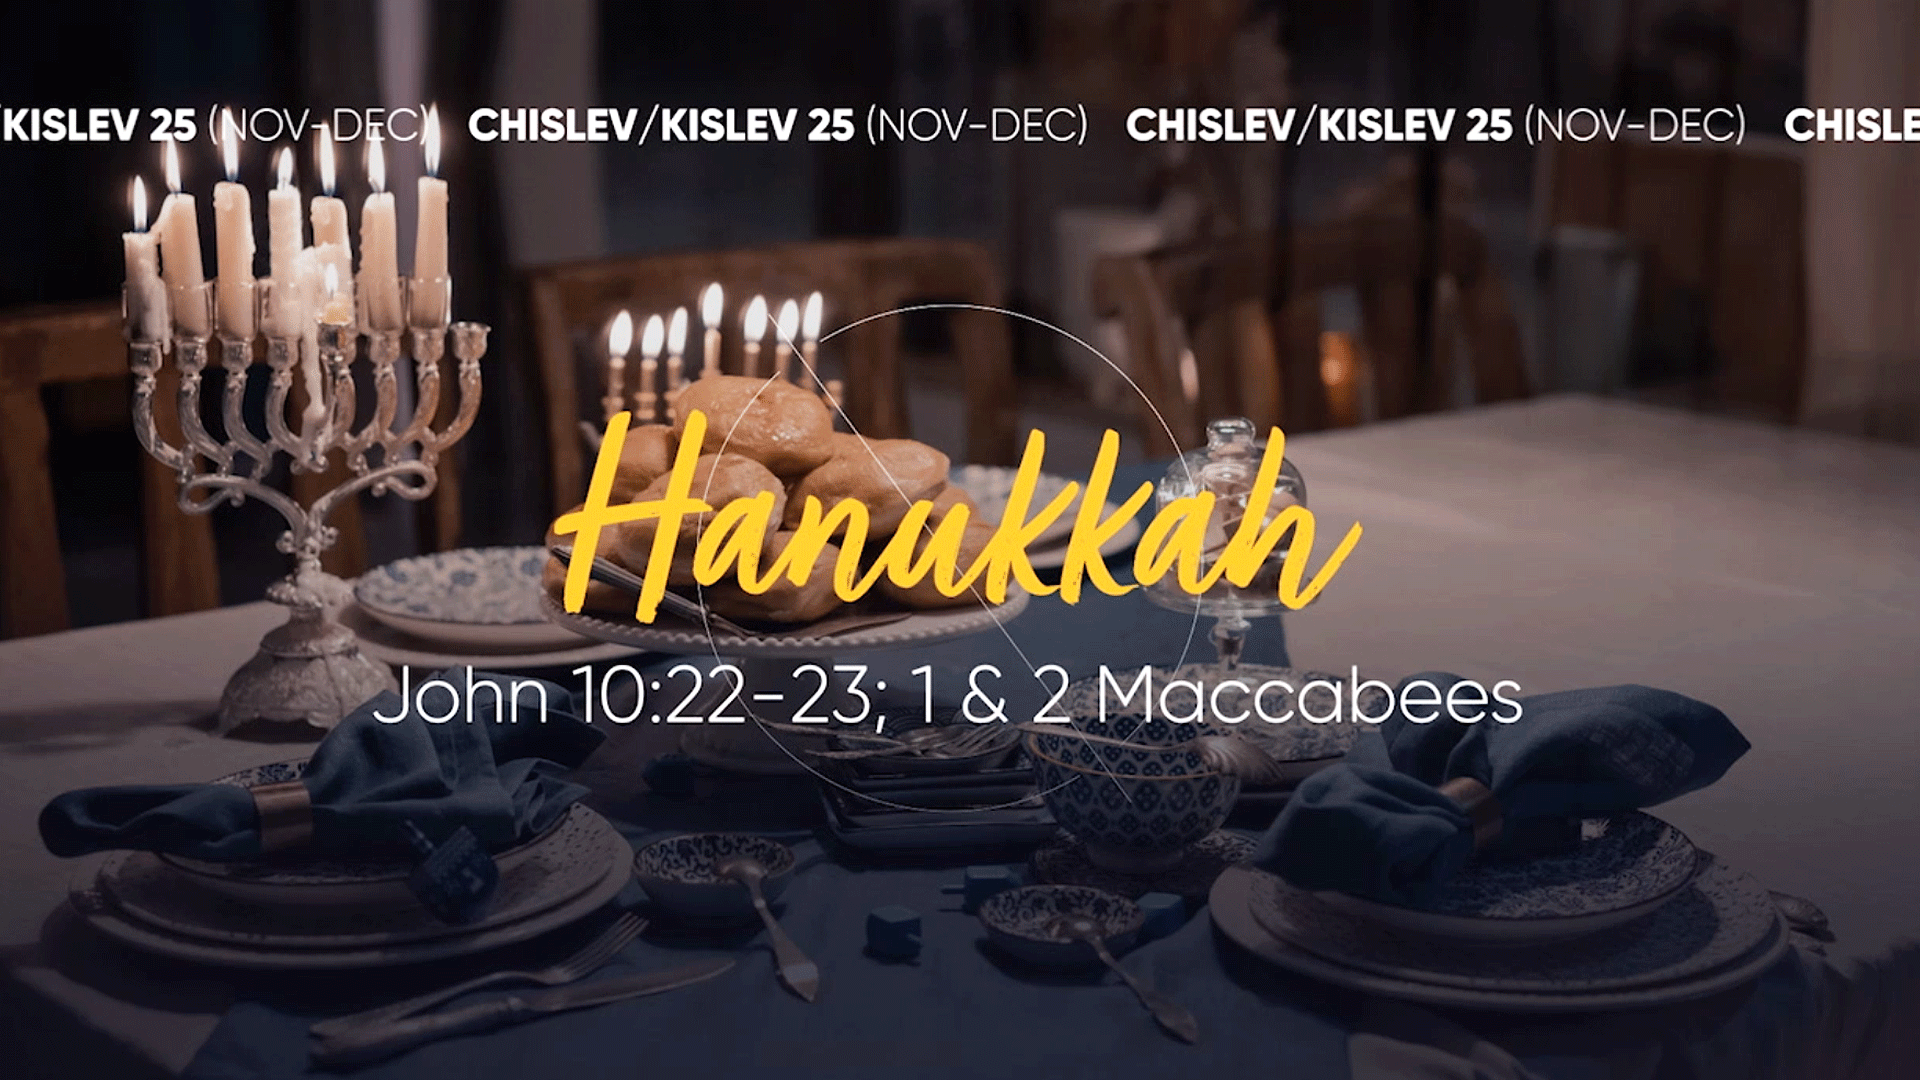 The Jewish Feasts of Hanukkah and Purim